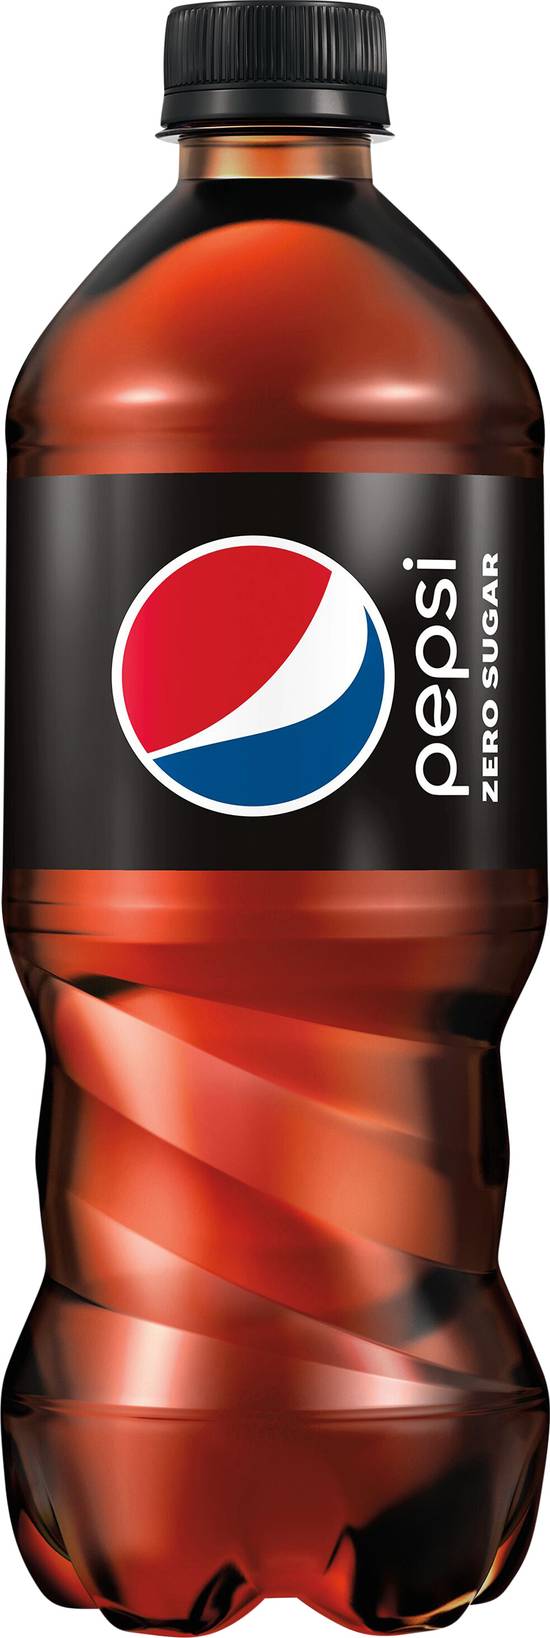 Pepsi Zero Sugar Soda (591 ml